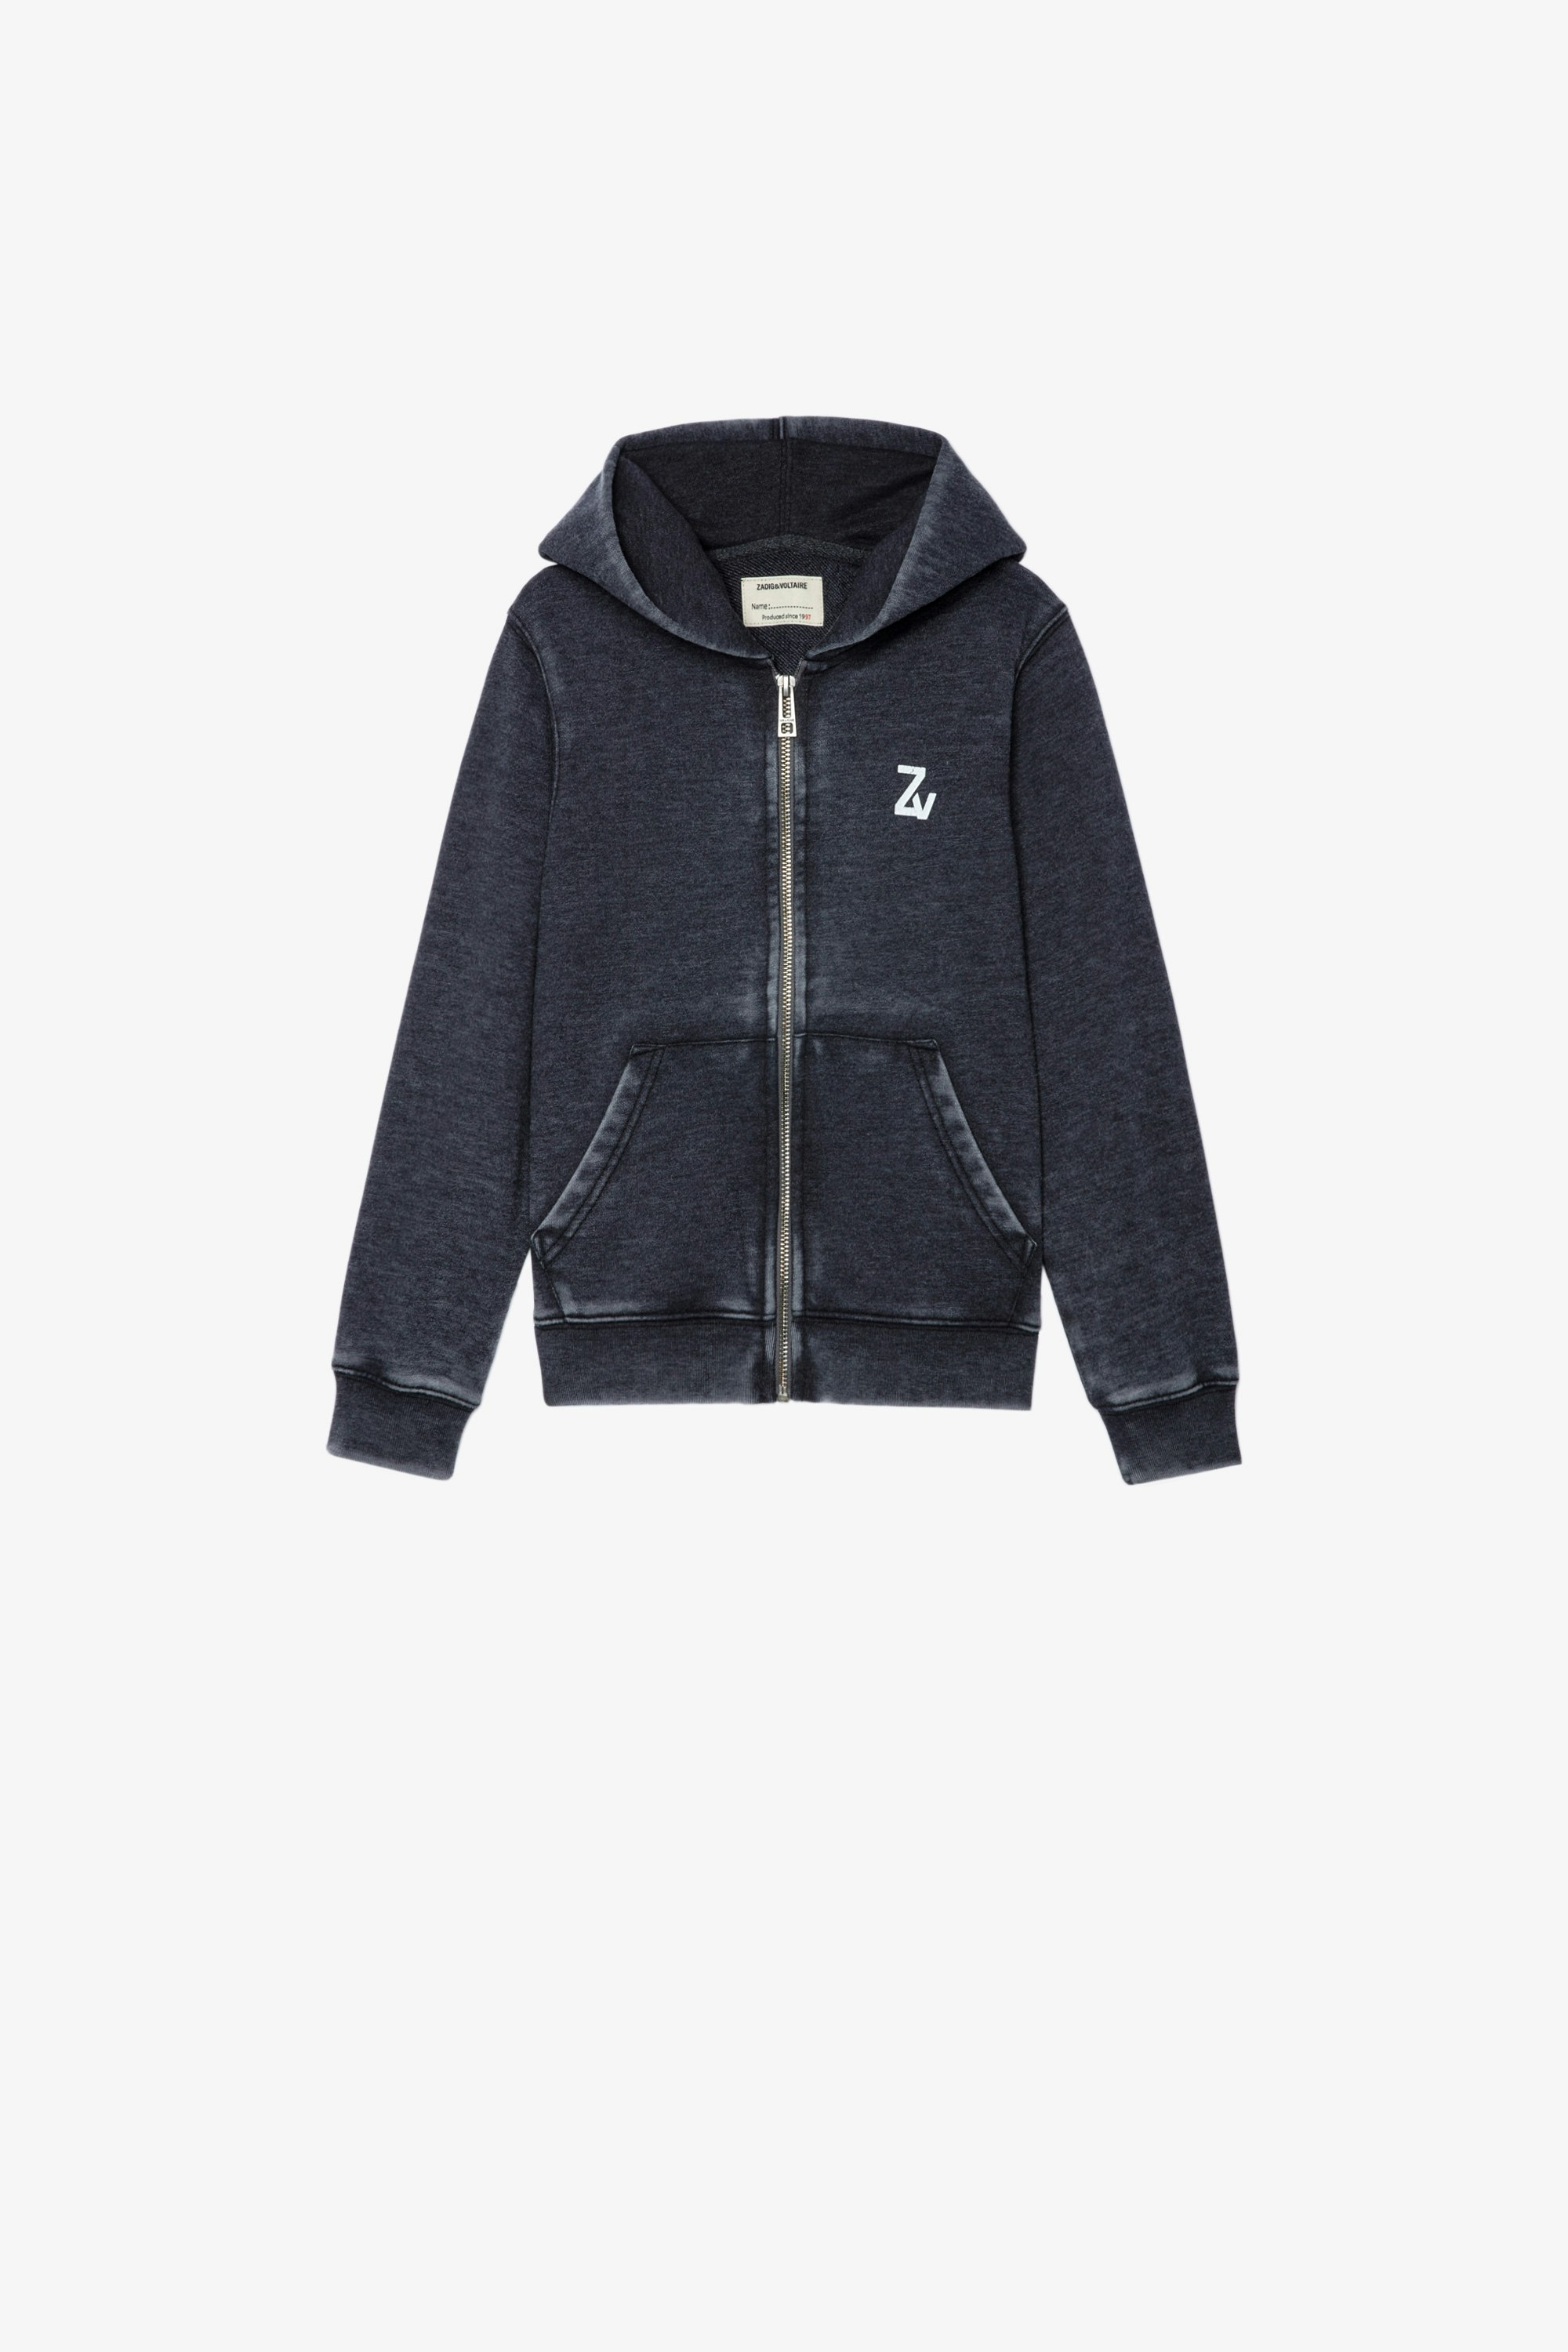 Ghost Kids' Sweatshirt Kids’ zip-up hoodie in grey marl cotton with photoprint